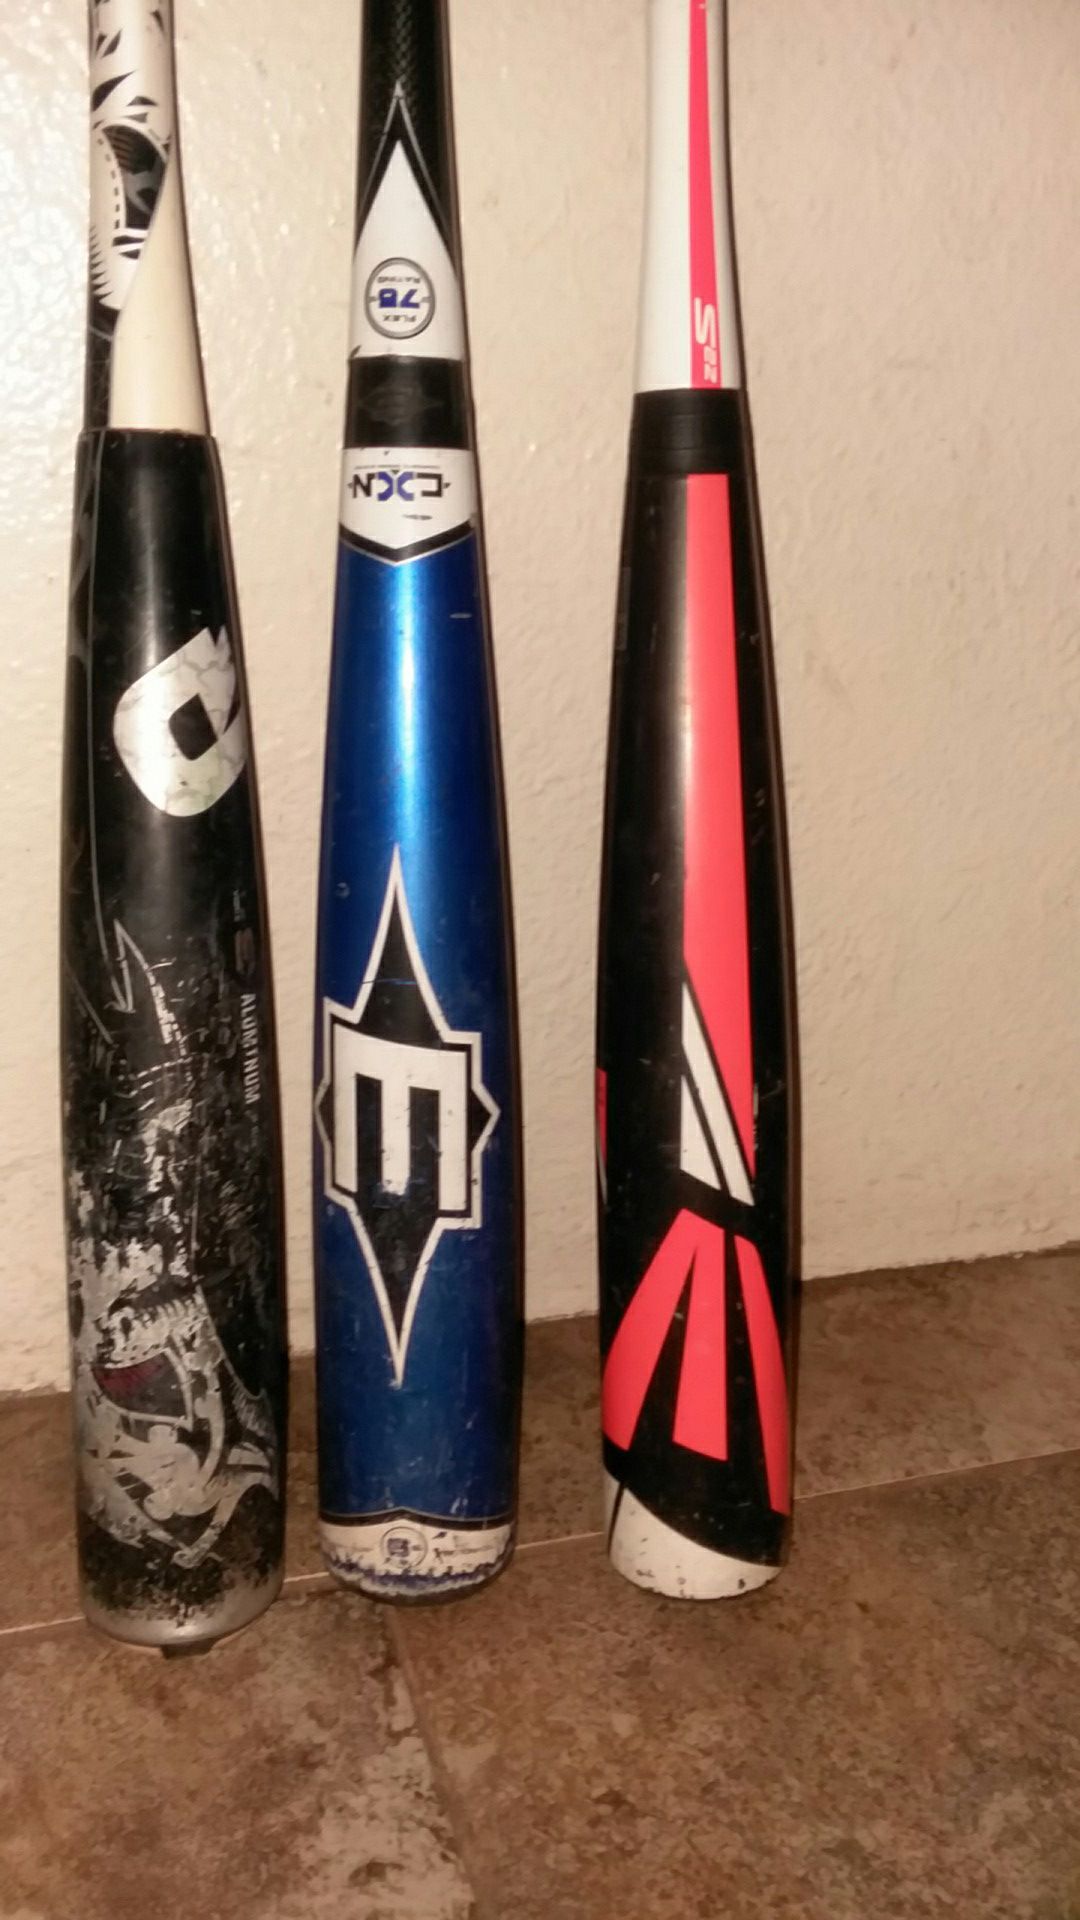 Demarini and two Easton baseball bats